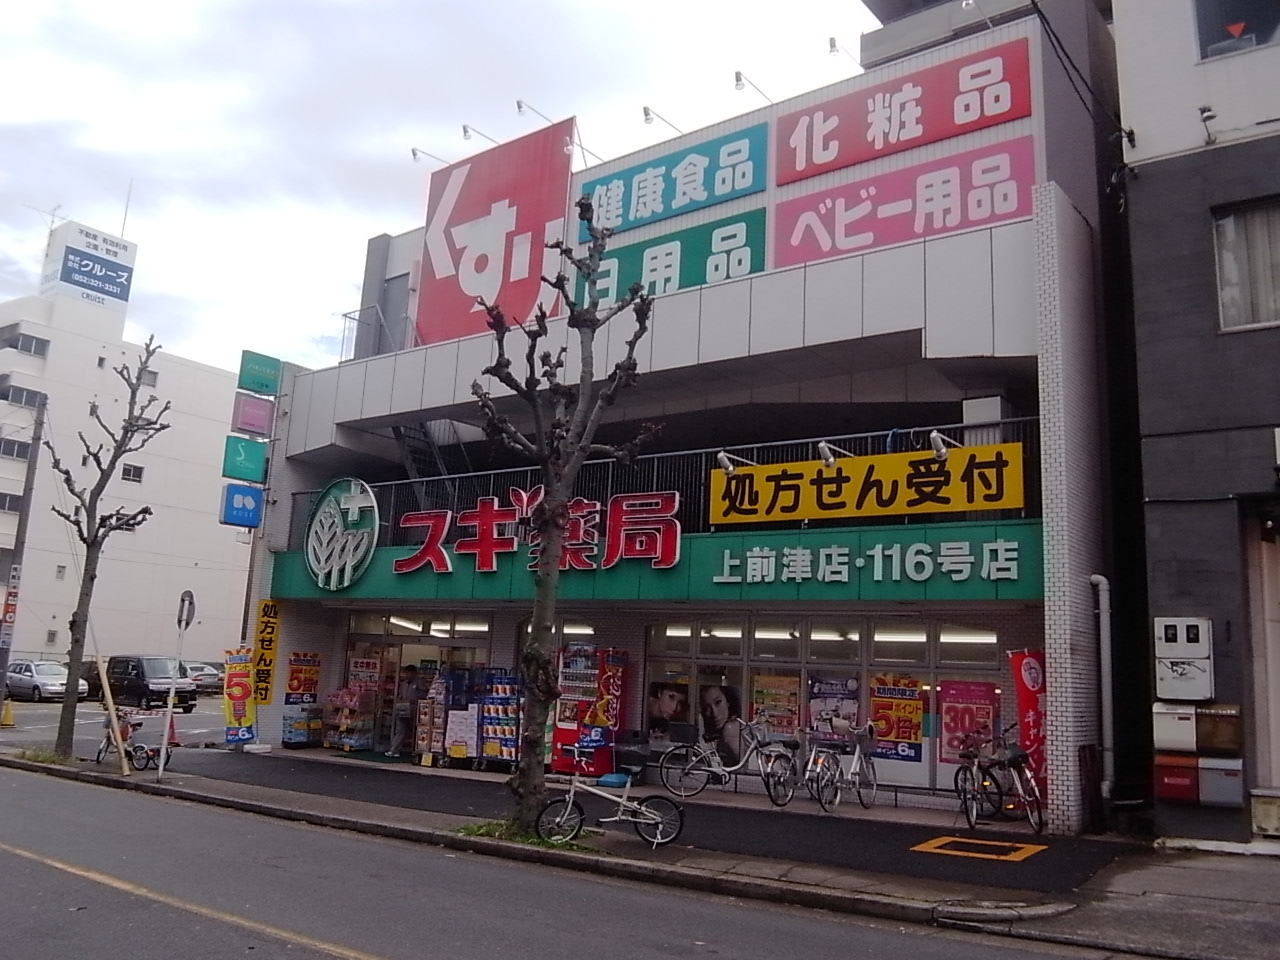 Dorakkusutoa. Cedar pharmacy Kamimaezu shop 320m until (drugstore)